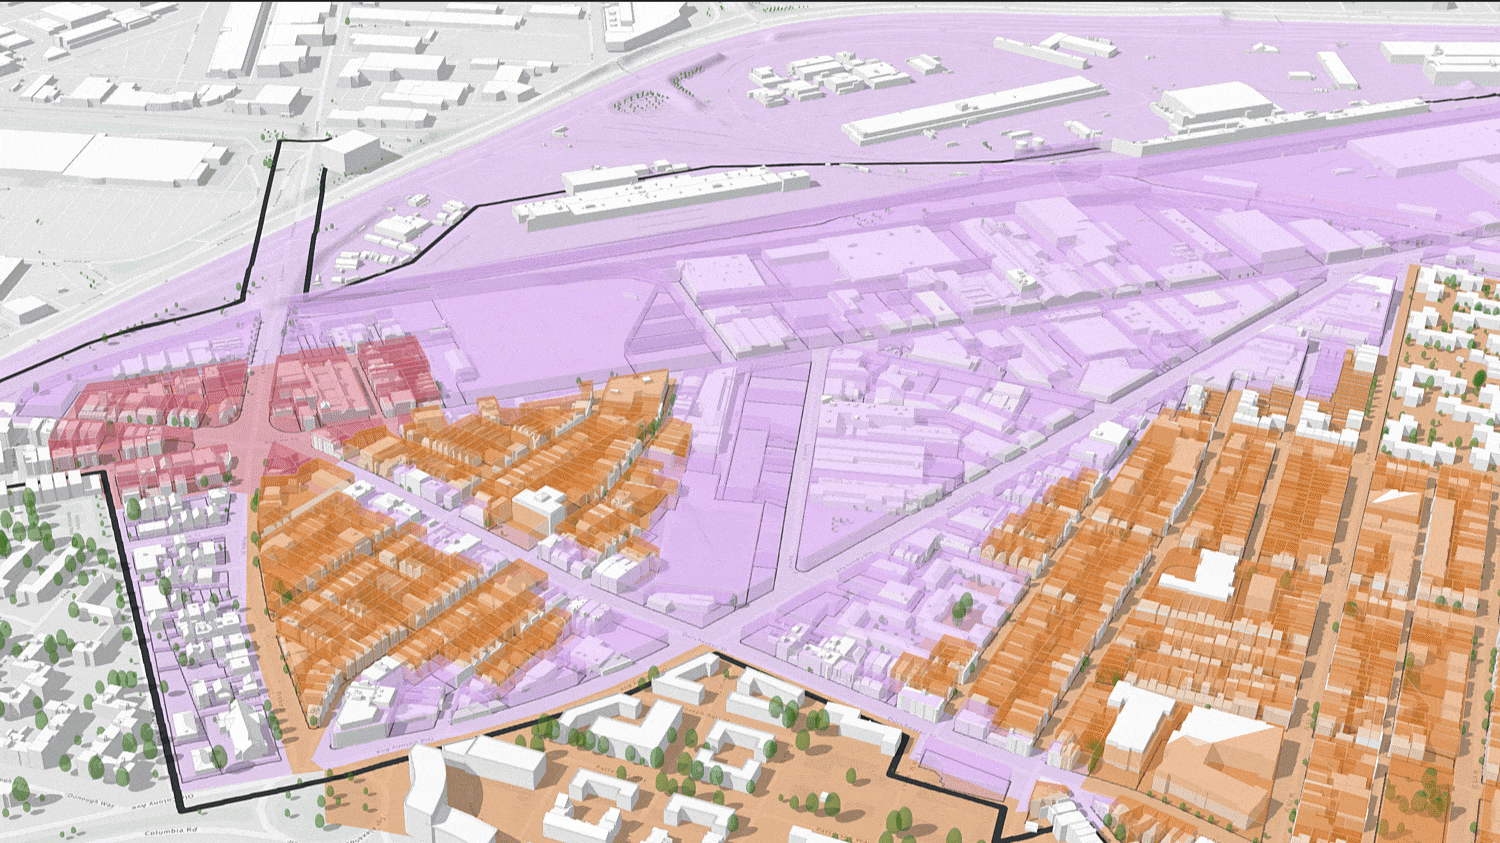 3D envelopes in ArcGIS Urban cast over several 3D buildings.